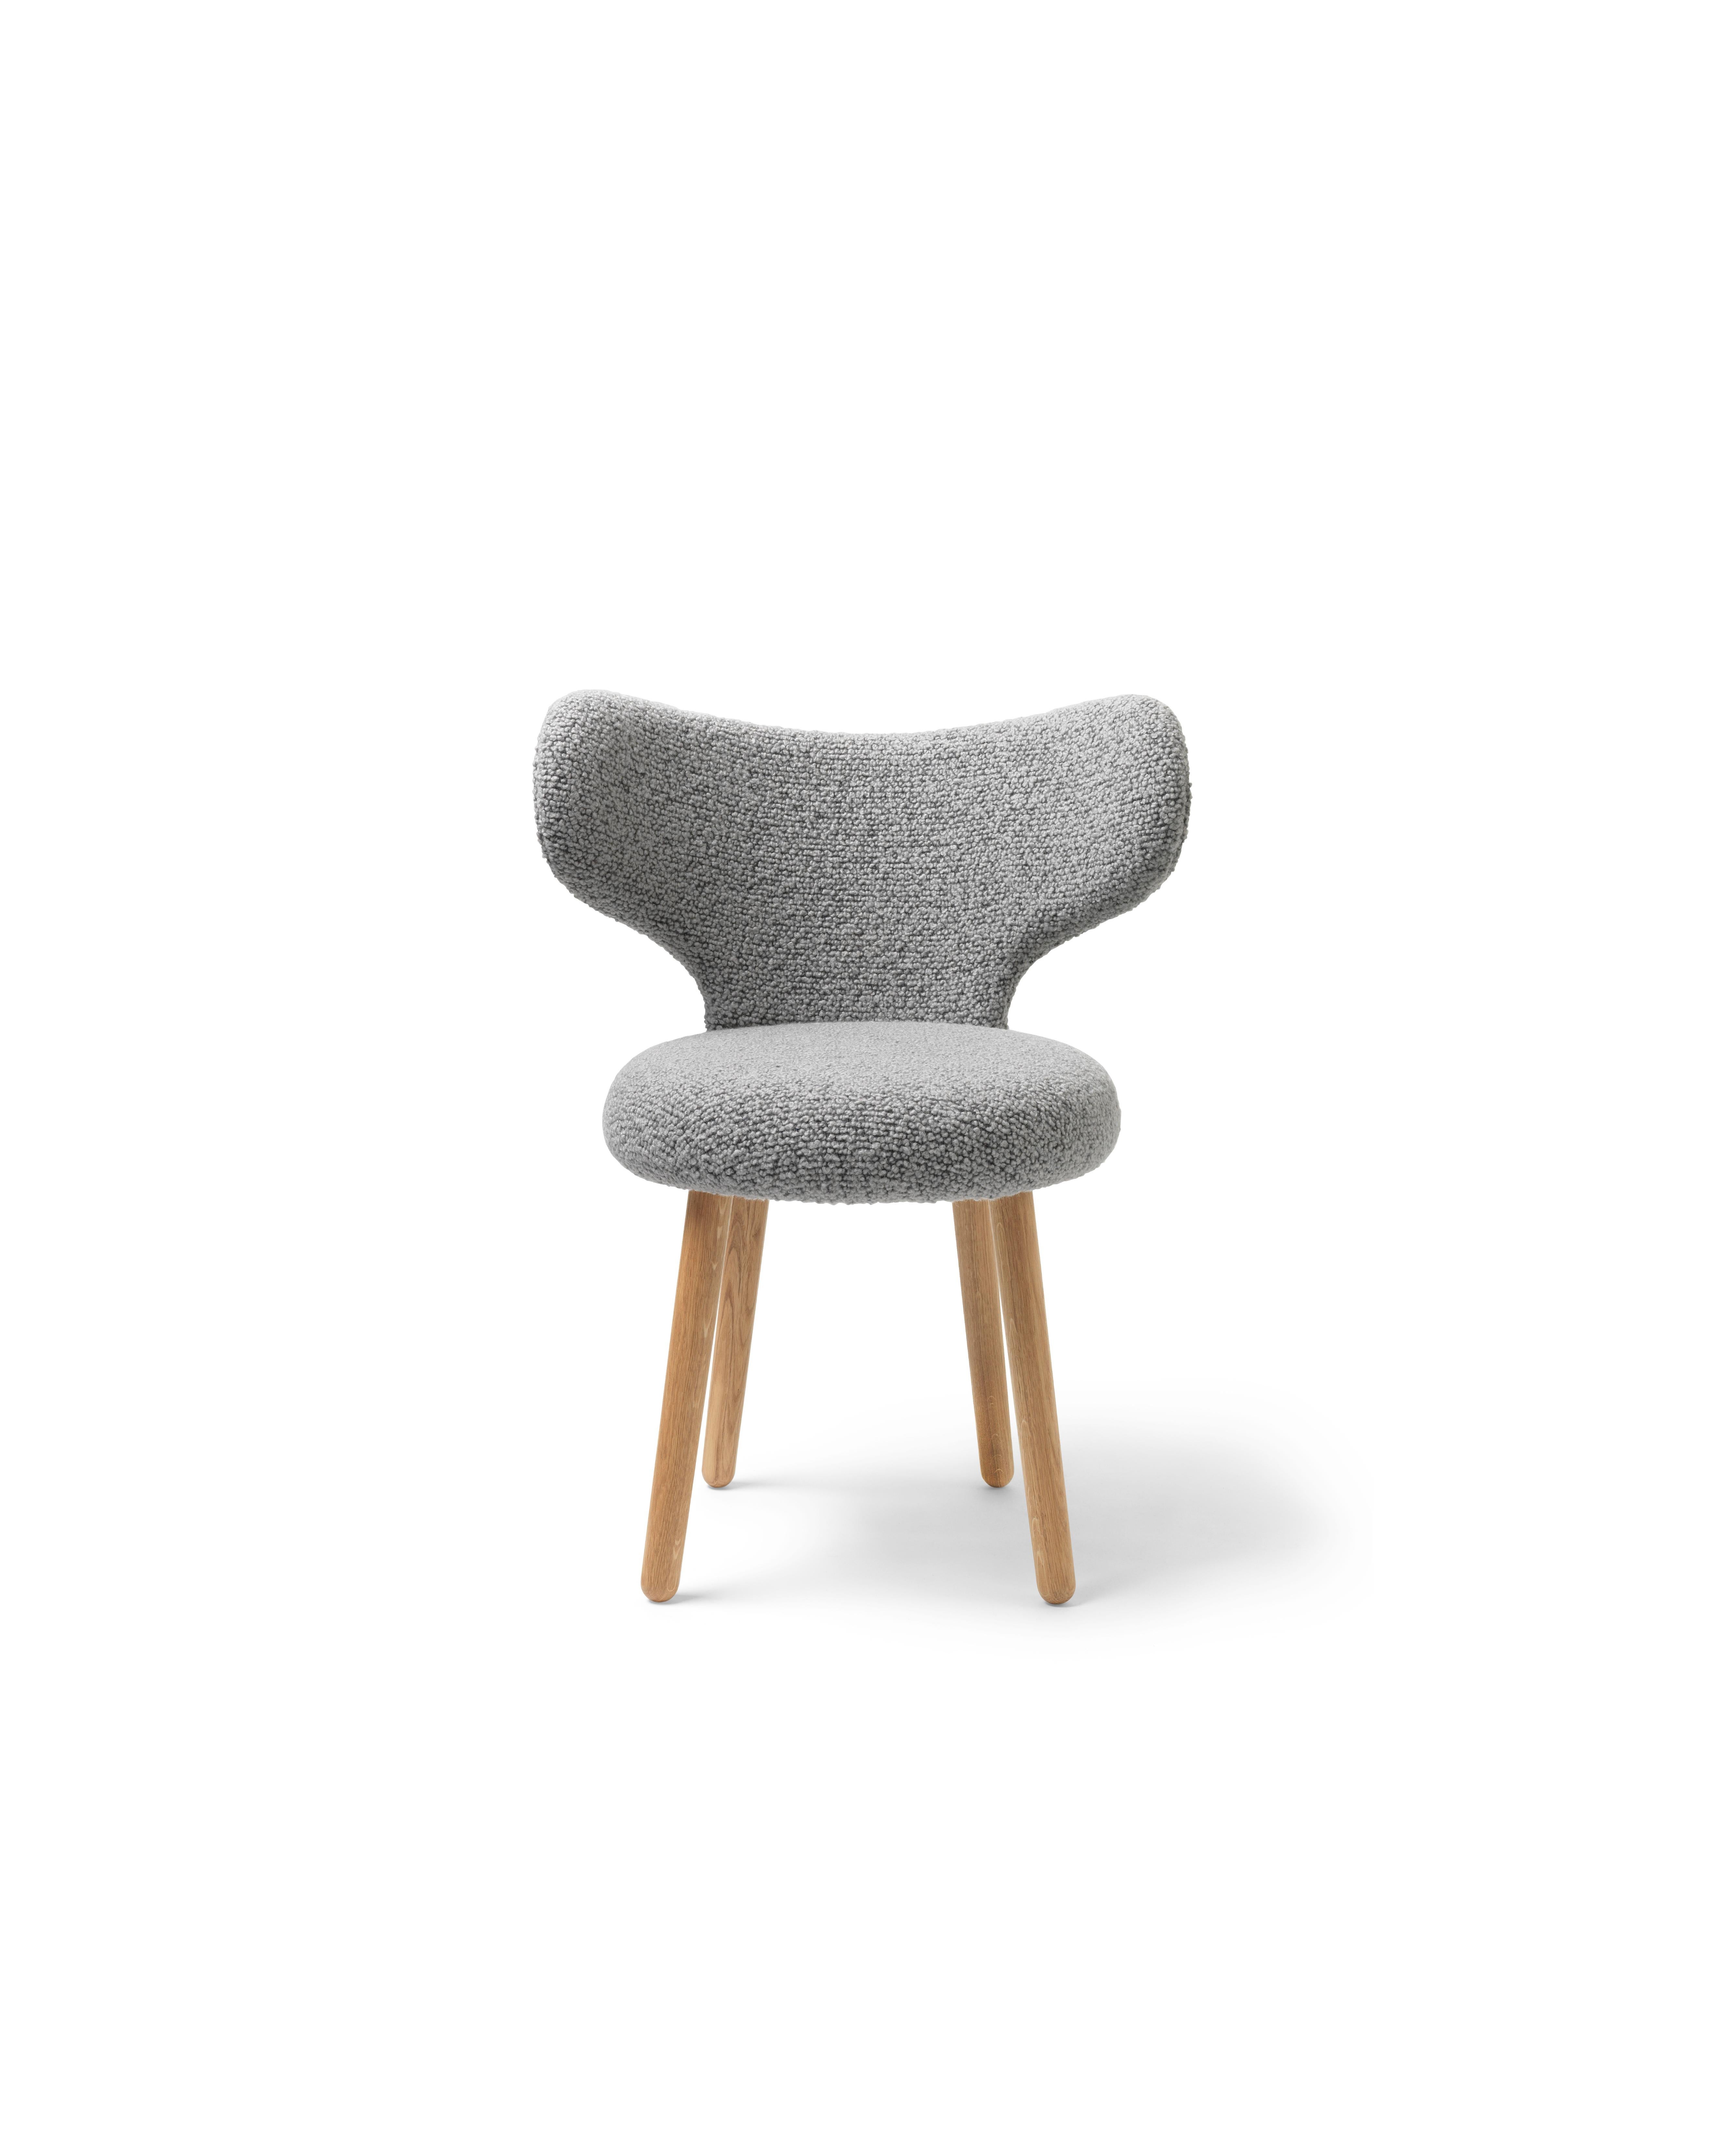 BUTE/Storr WNG chair by Mazo Design
Dimensions: W 60 x D 50 x H 76 cm
Materials: Oak, Textile
Also Available: DAW/Royal, KVADRAT/Hallingdal & Fiord, KVADRAT/ Vidar, DAW/Mcnutt, DEDAR/Artemidor, Sheepskin.
The WNG Chair’s rounded shape is puffed